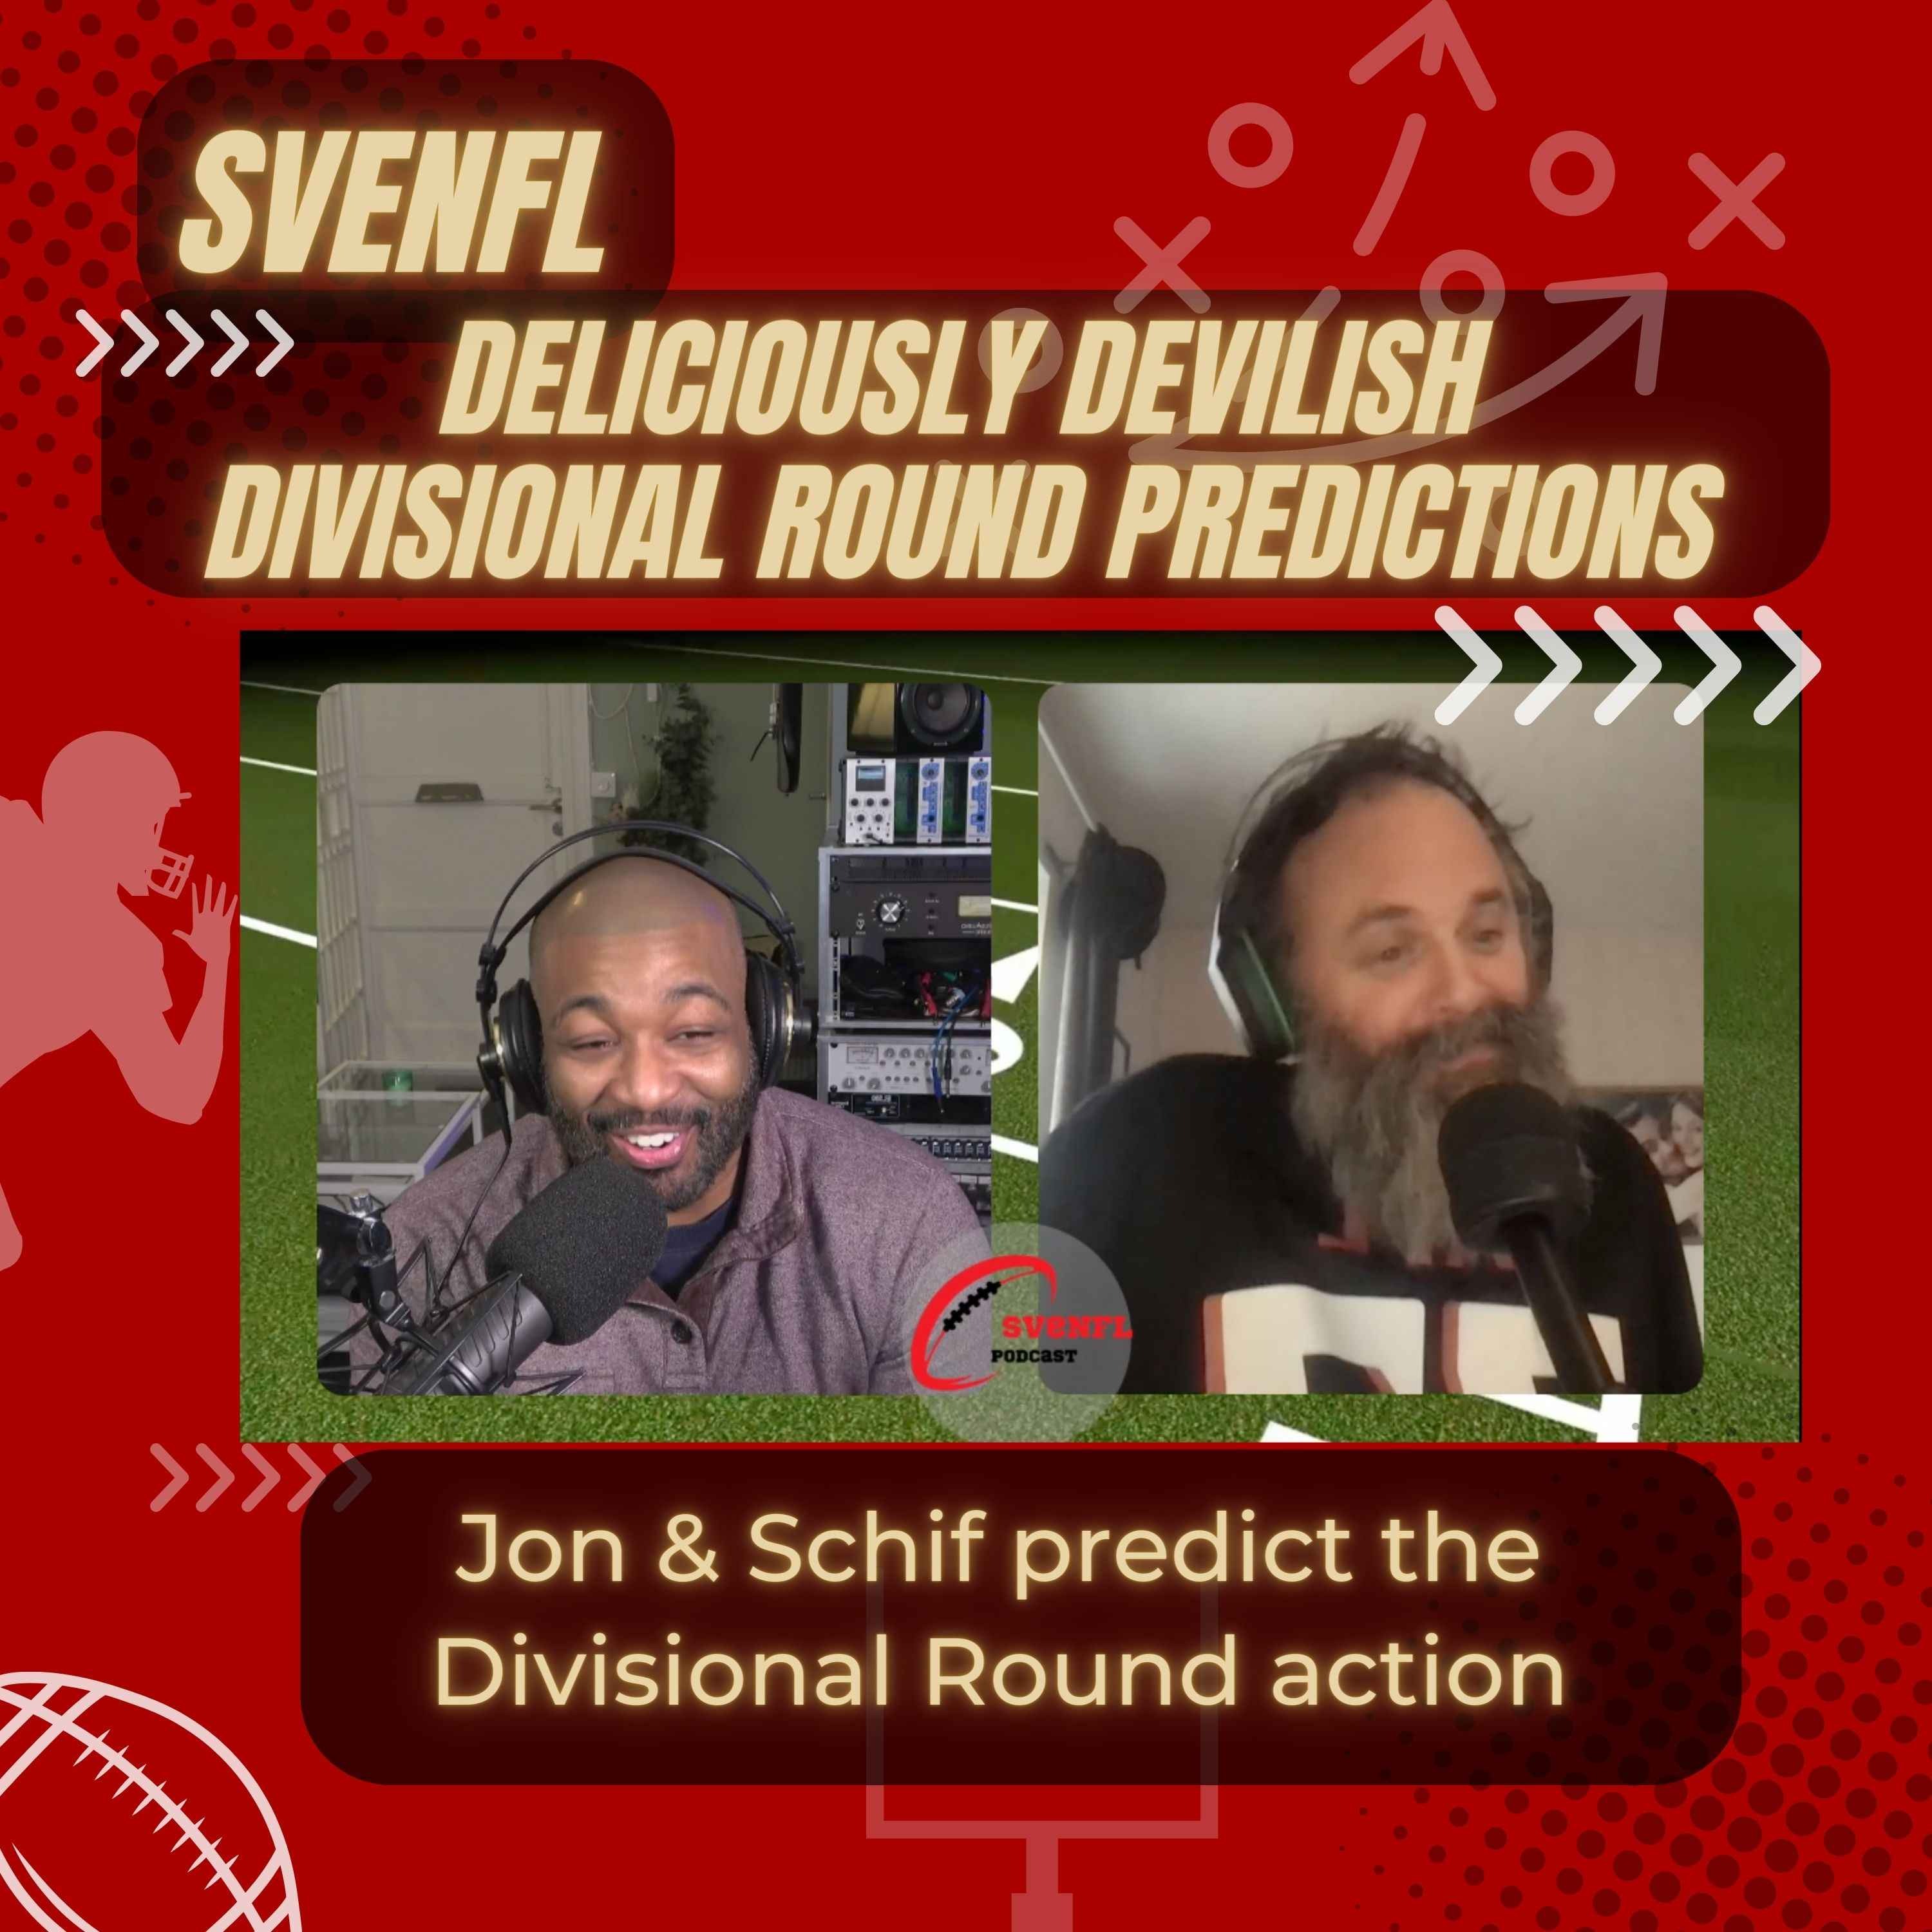 SveNFL Deliciously Devlish Divisional Round Predictions